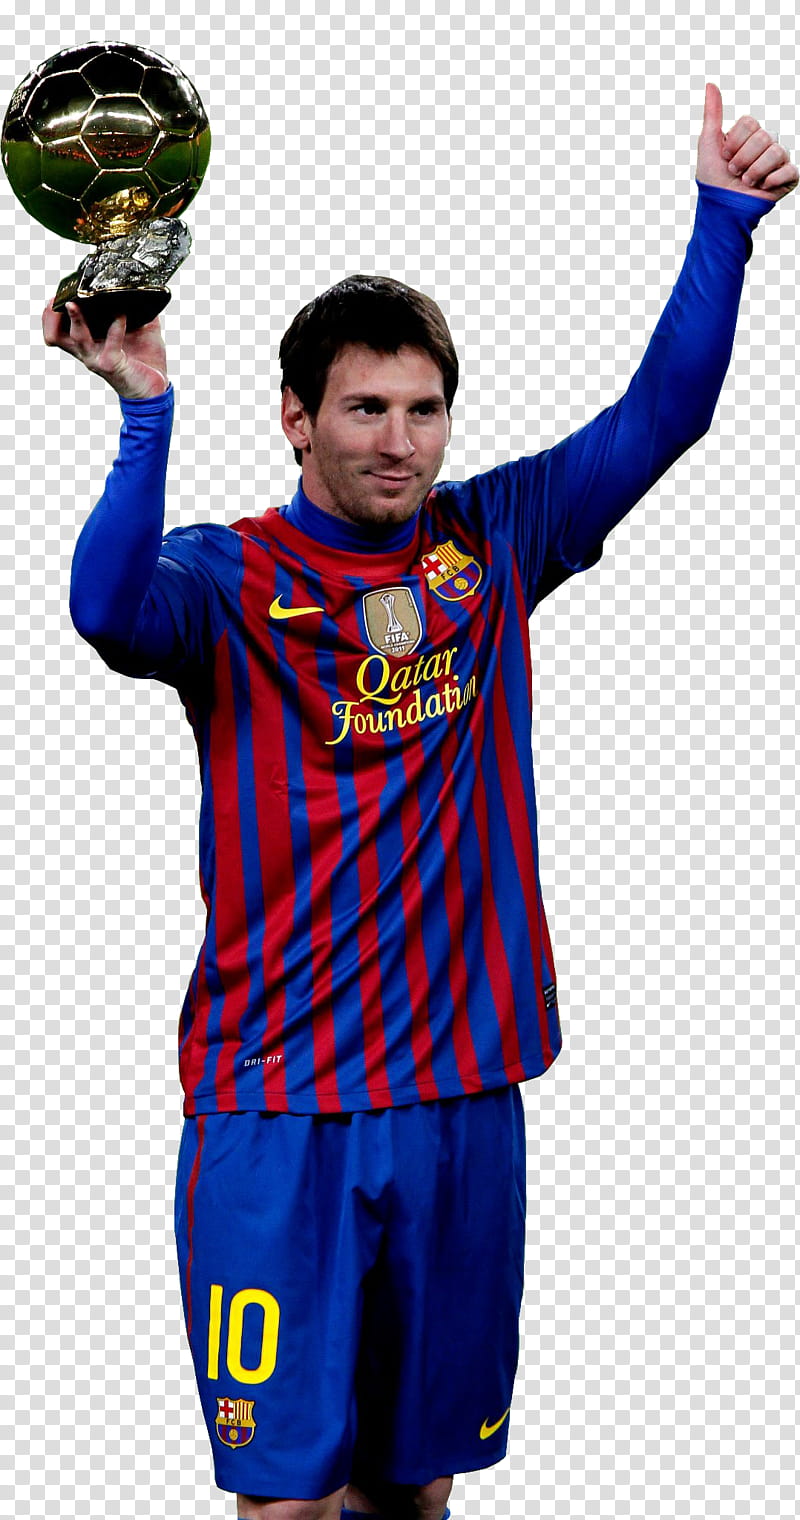 Messi, Lionel Messi holding trophy transparent background PNG clipart